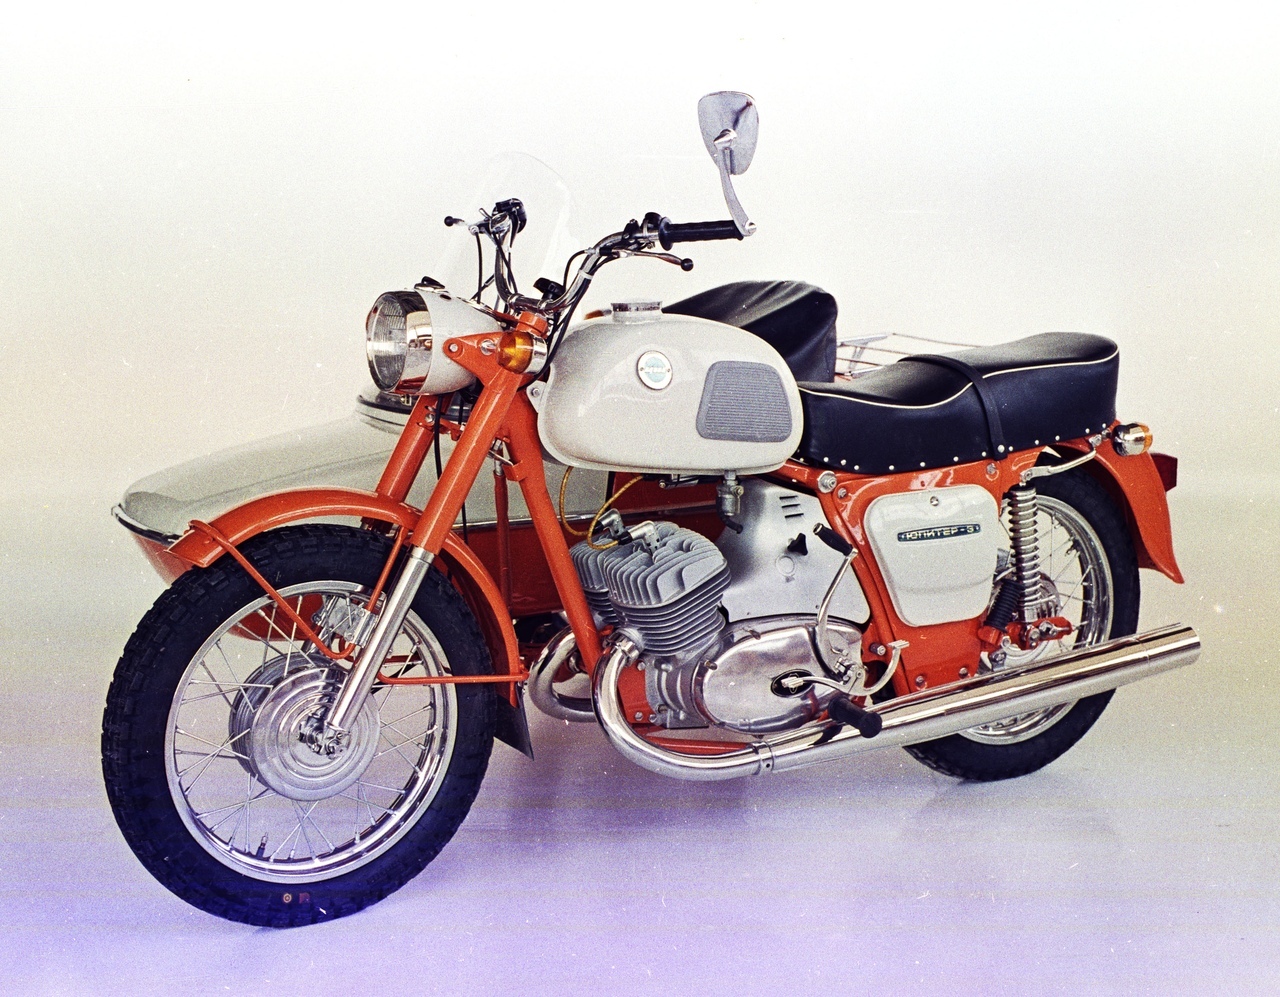 Мотоцикл иж юпитер 3 — советский мотоцикл за доступные деньги — мотоциклы | гонки на мотоциклах